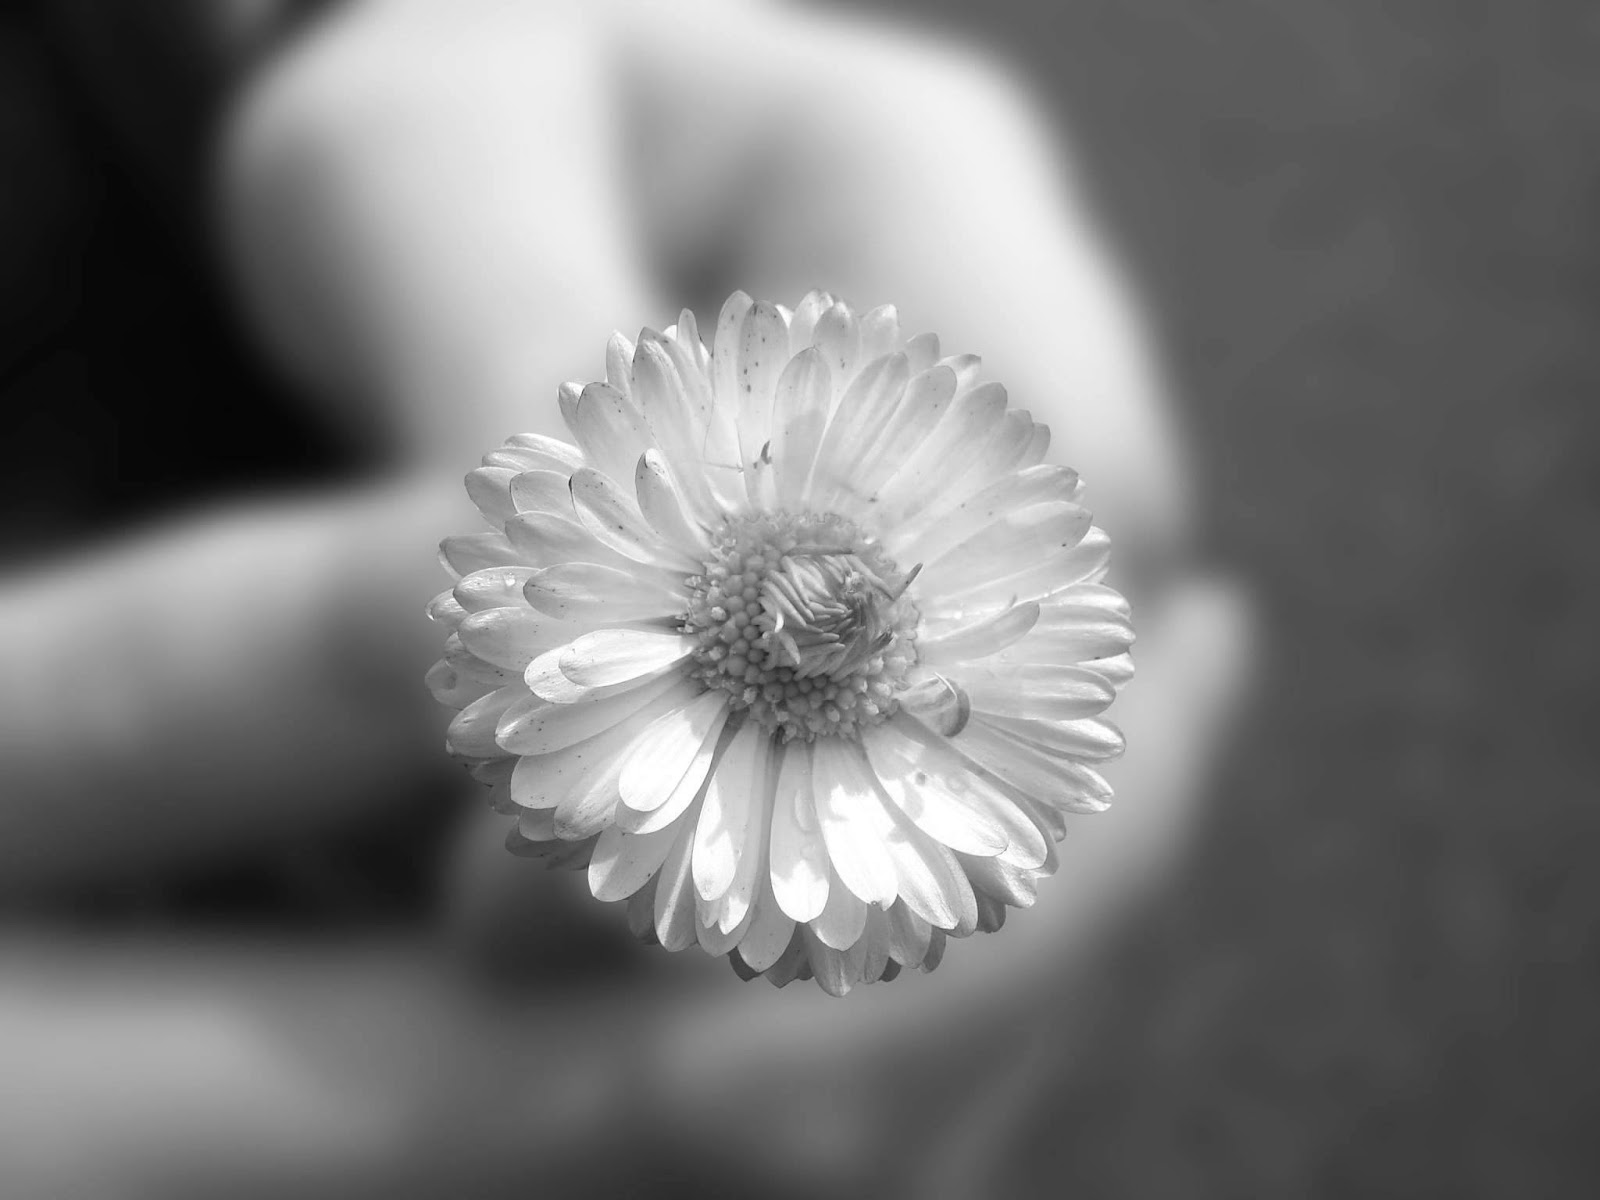 carta da parati fiore bianco e nero,bianca,fotografia in bianco e nero,bianco e nero,petalo,fiore